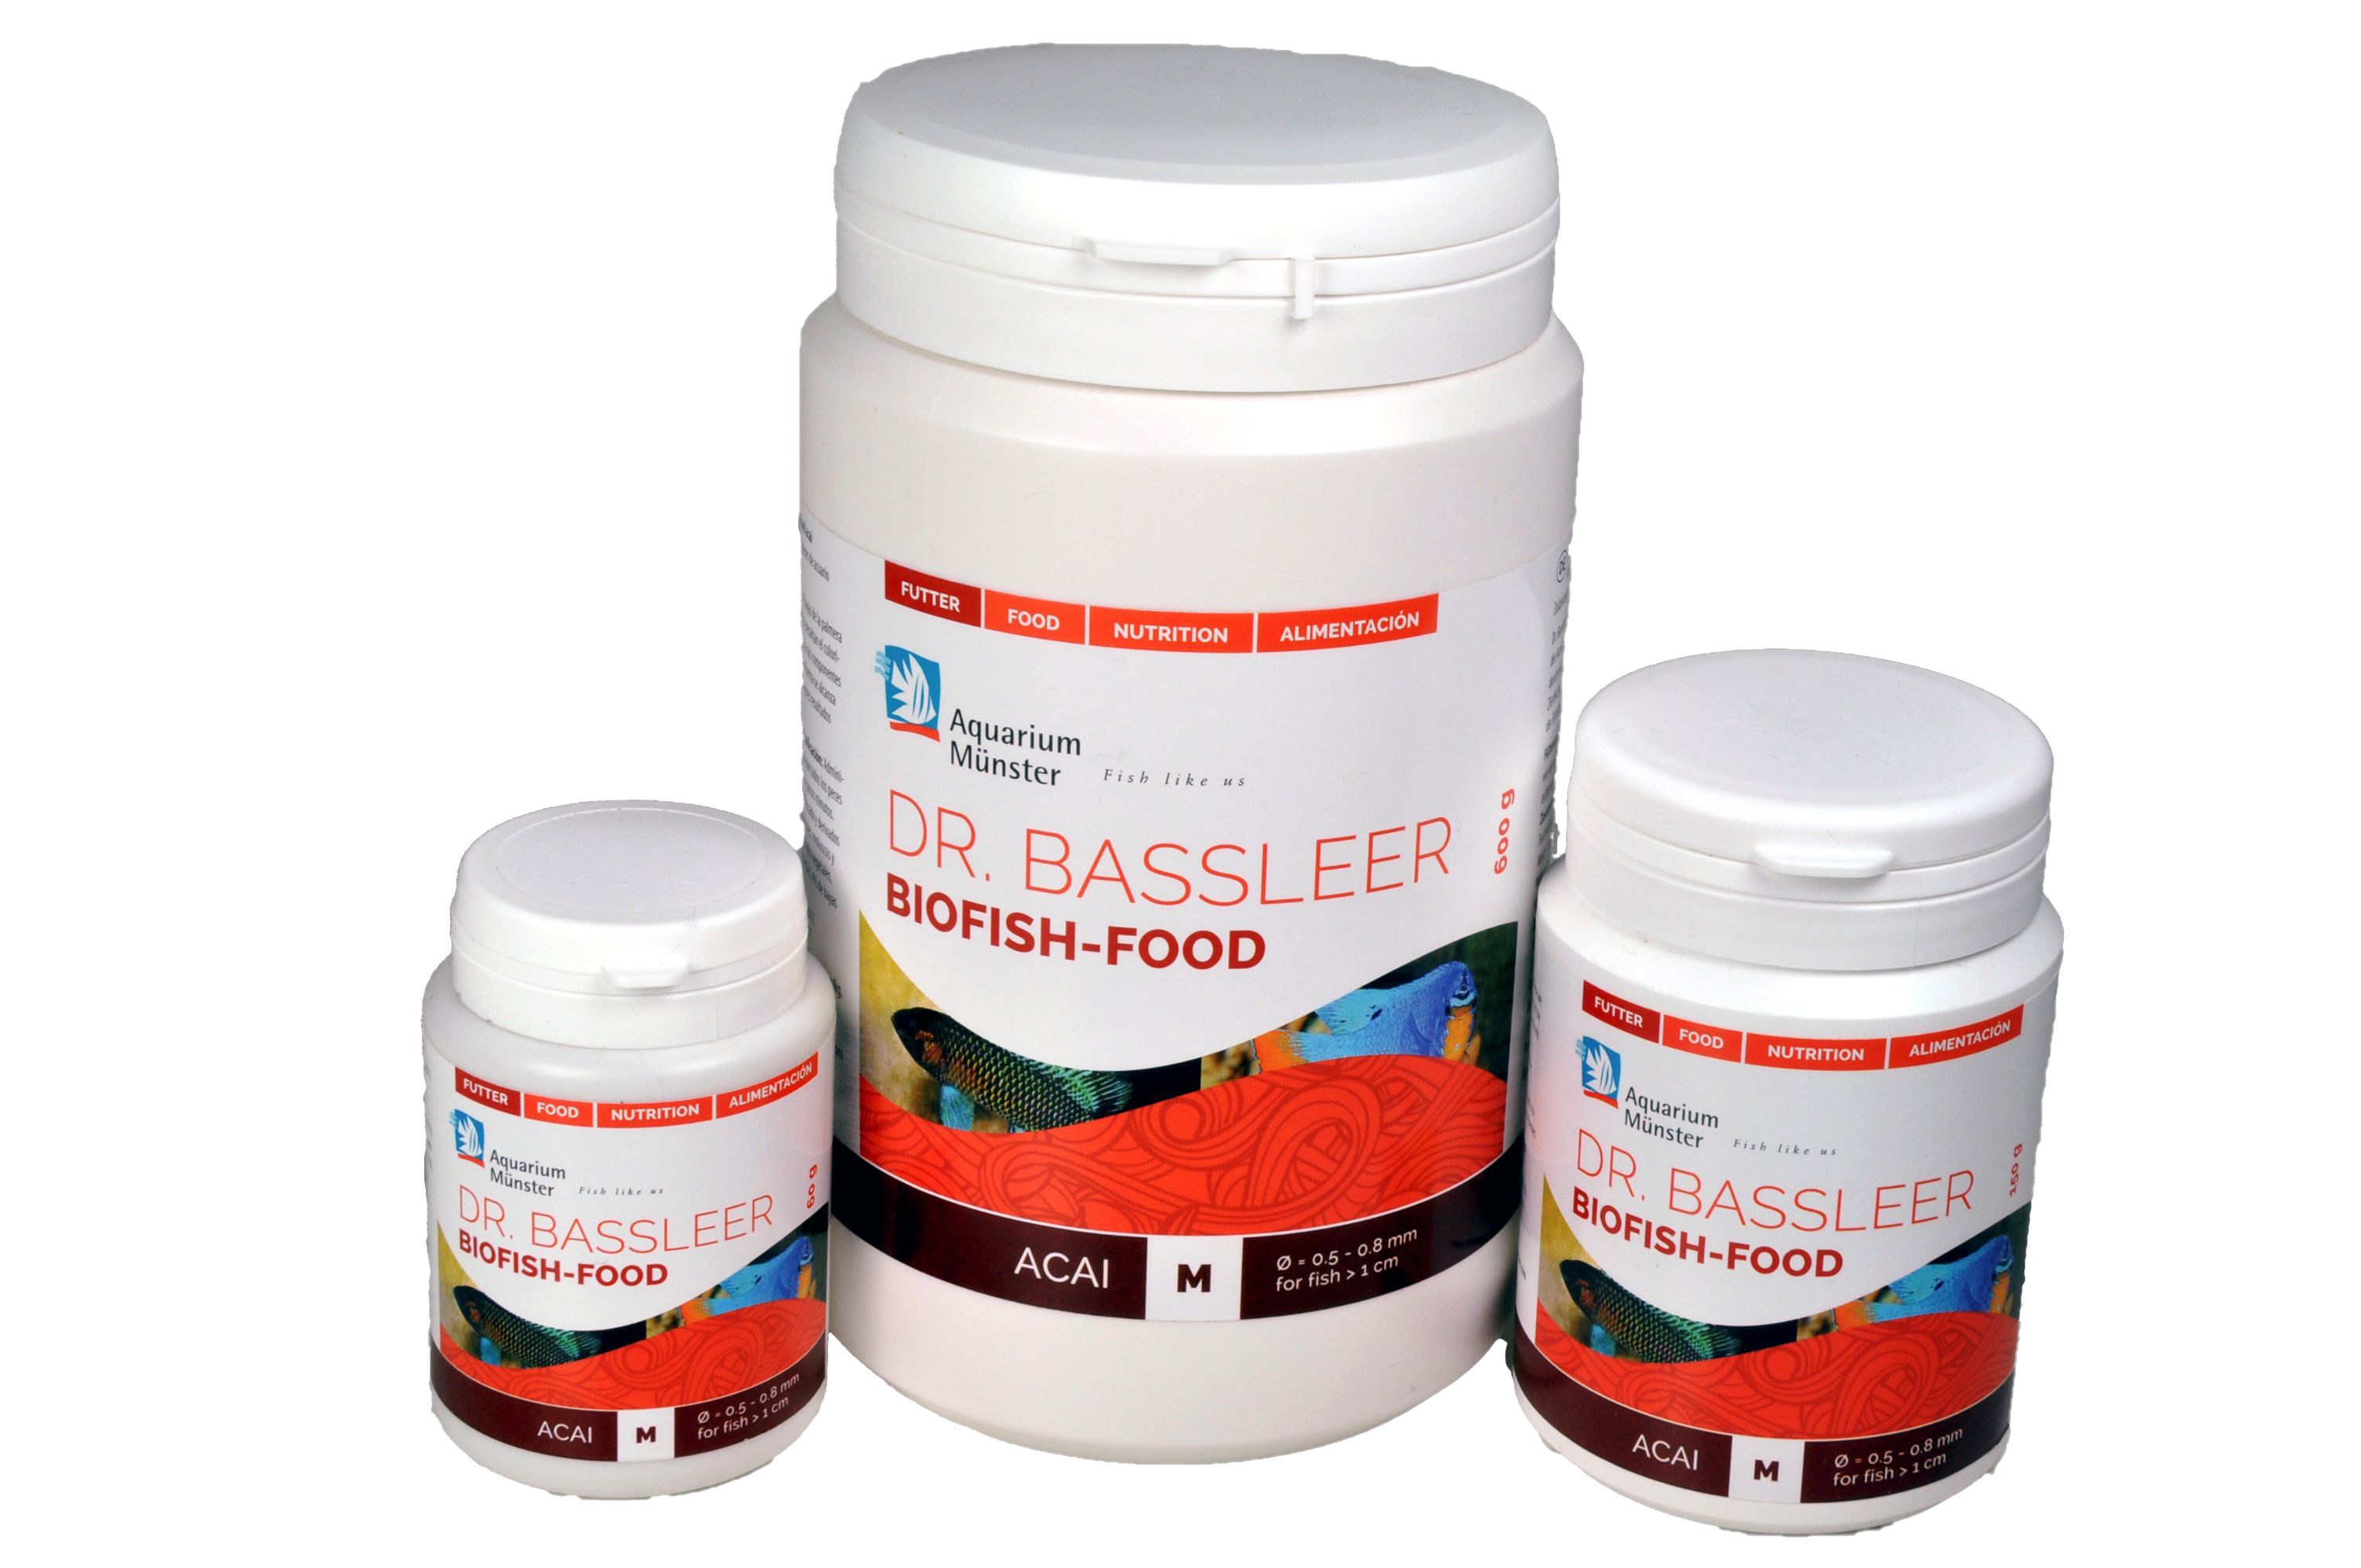 DR. BASSLEER BIOFISH FOOD acai